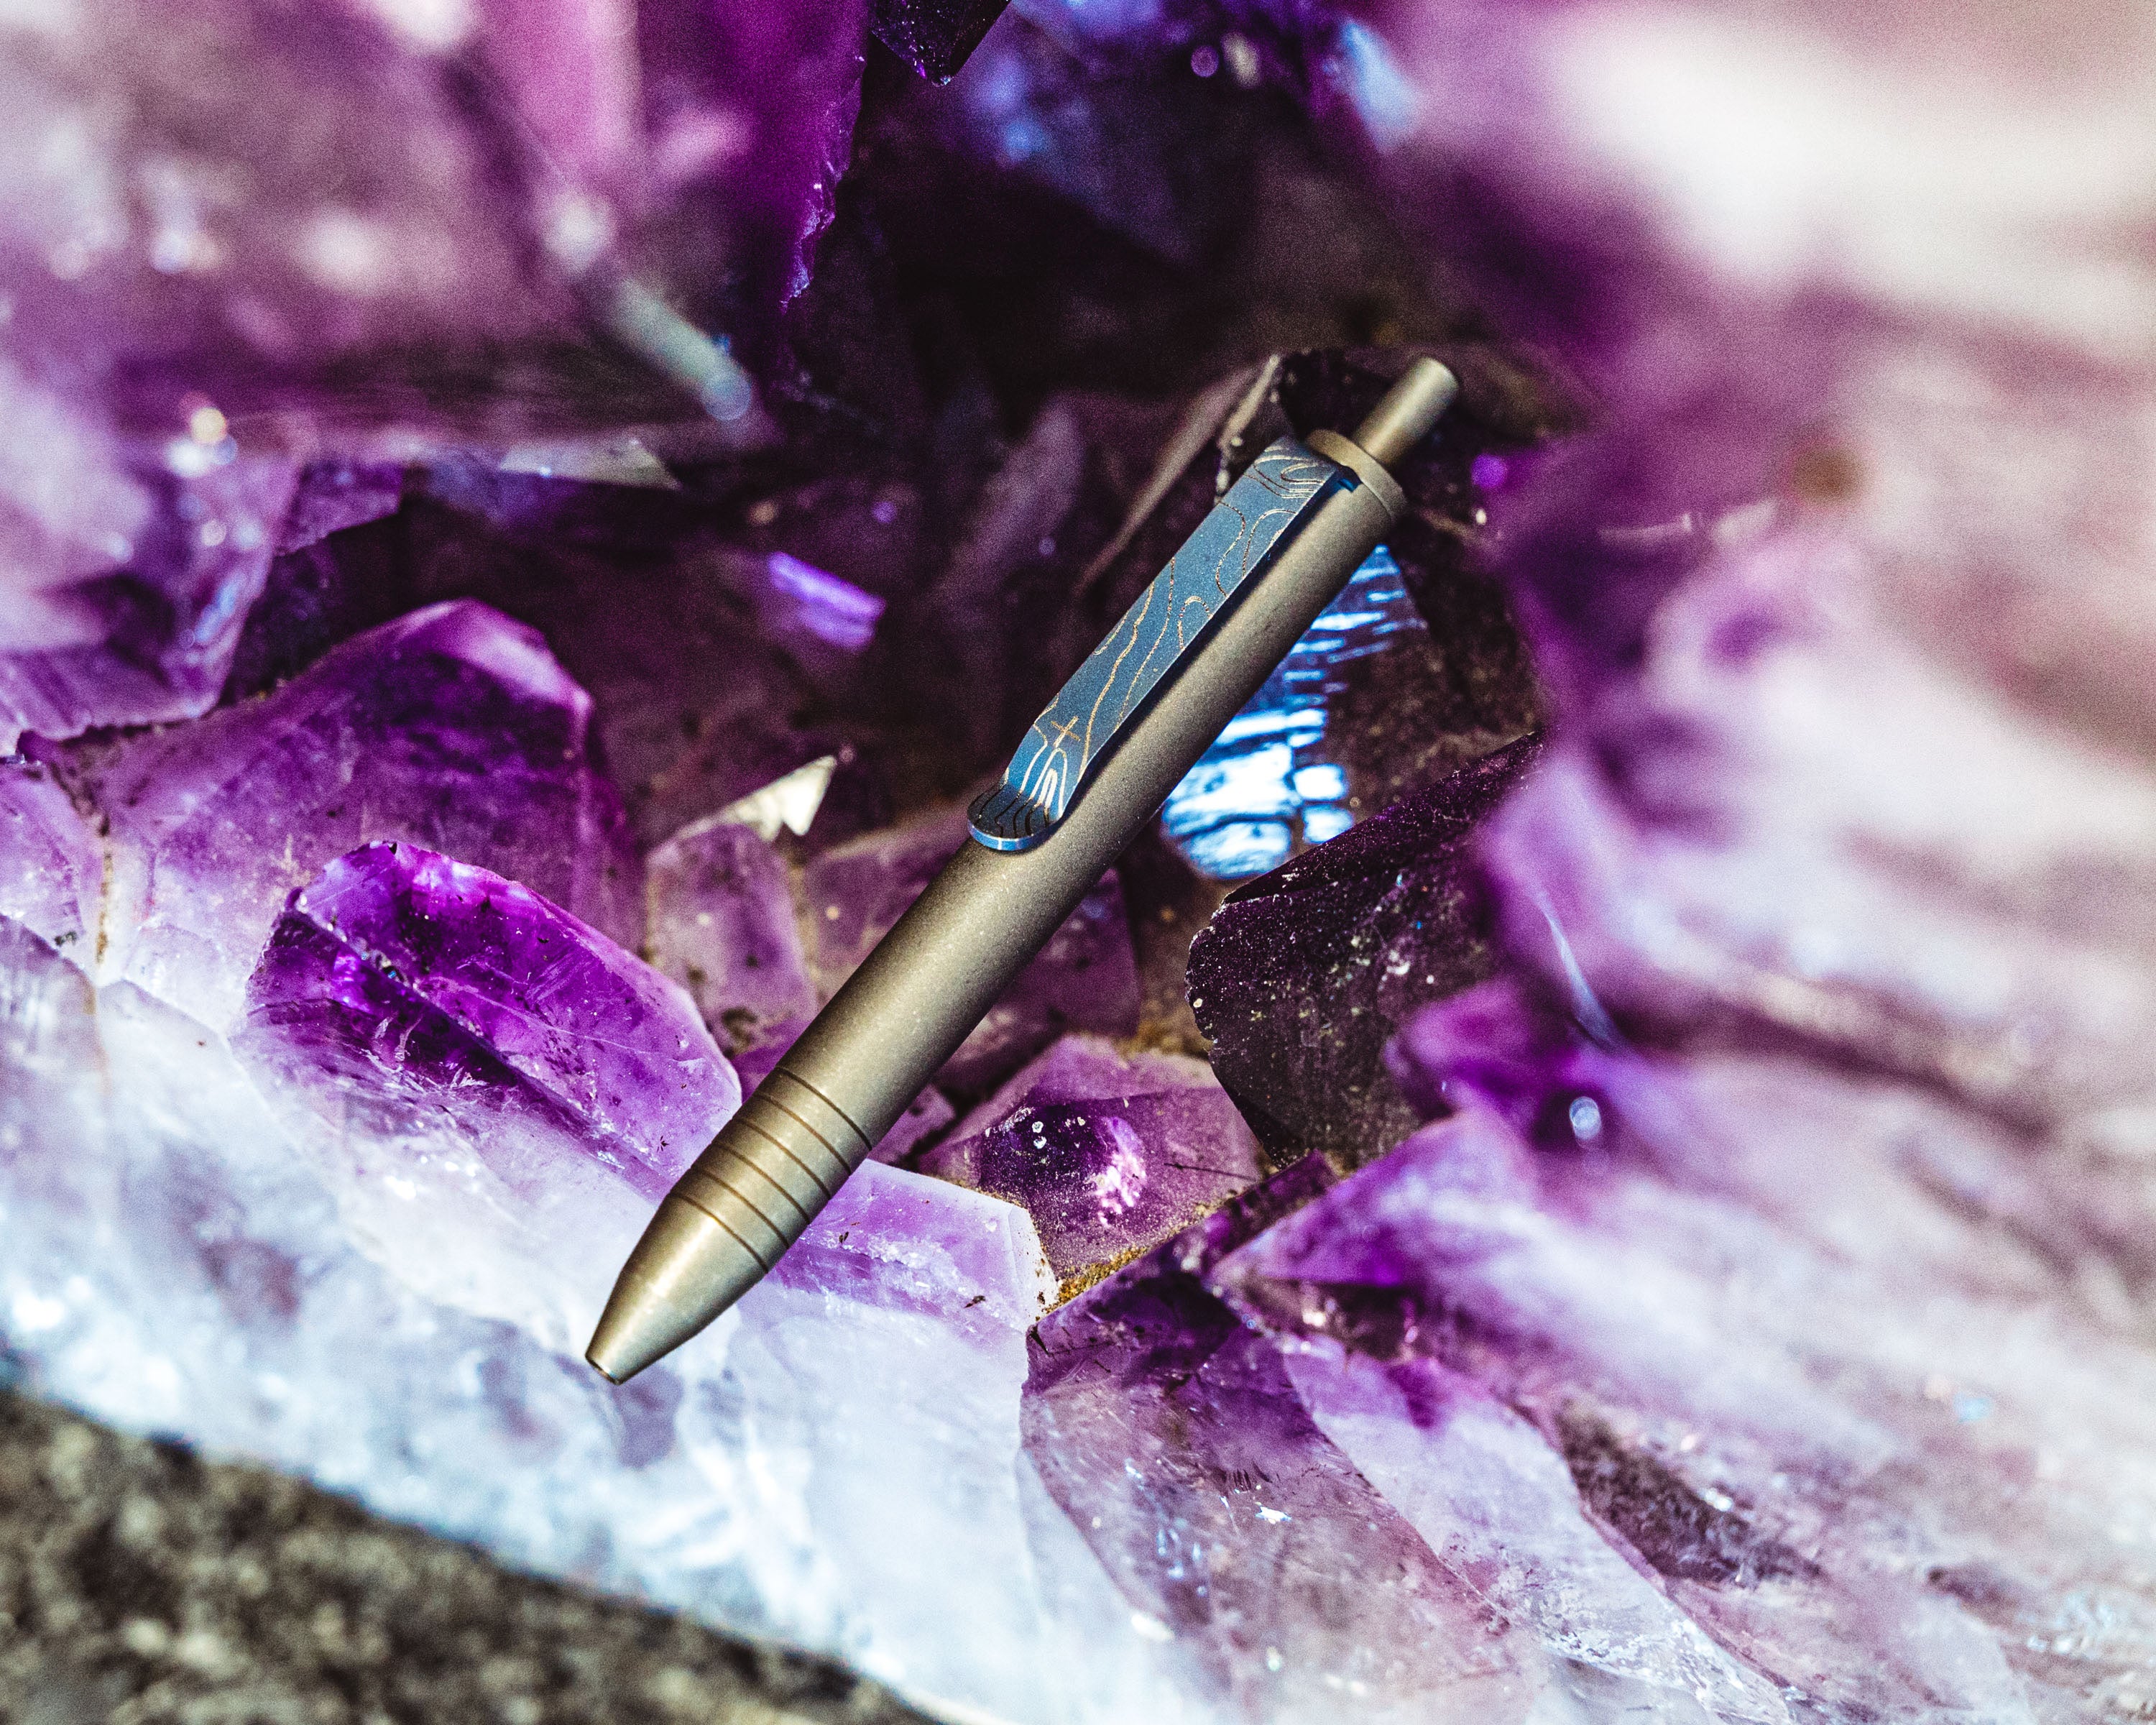 Titanium Carry Commission &amp; Big Idea Design mini click pen sitting on purple and white geode